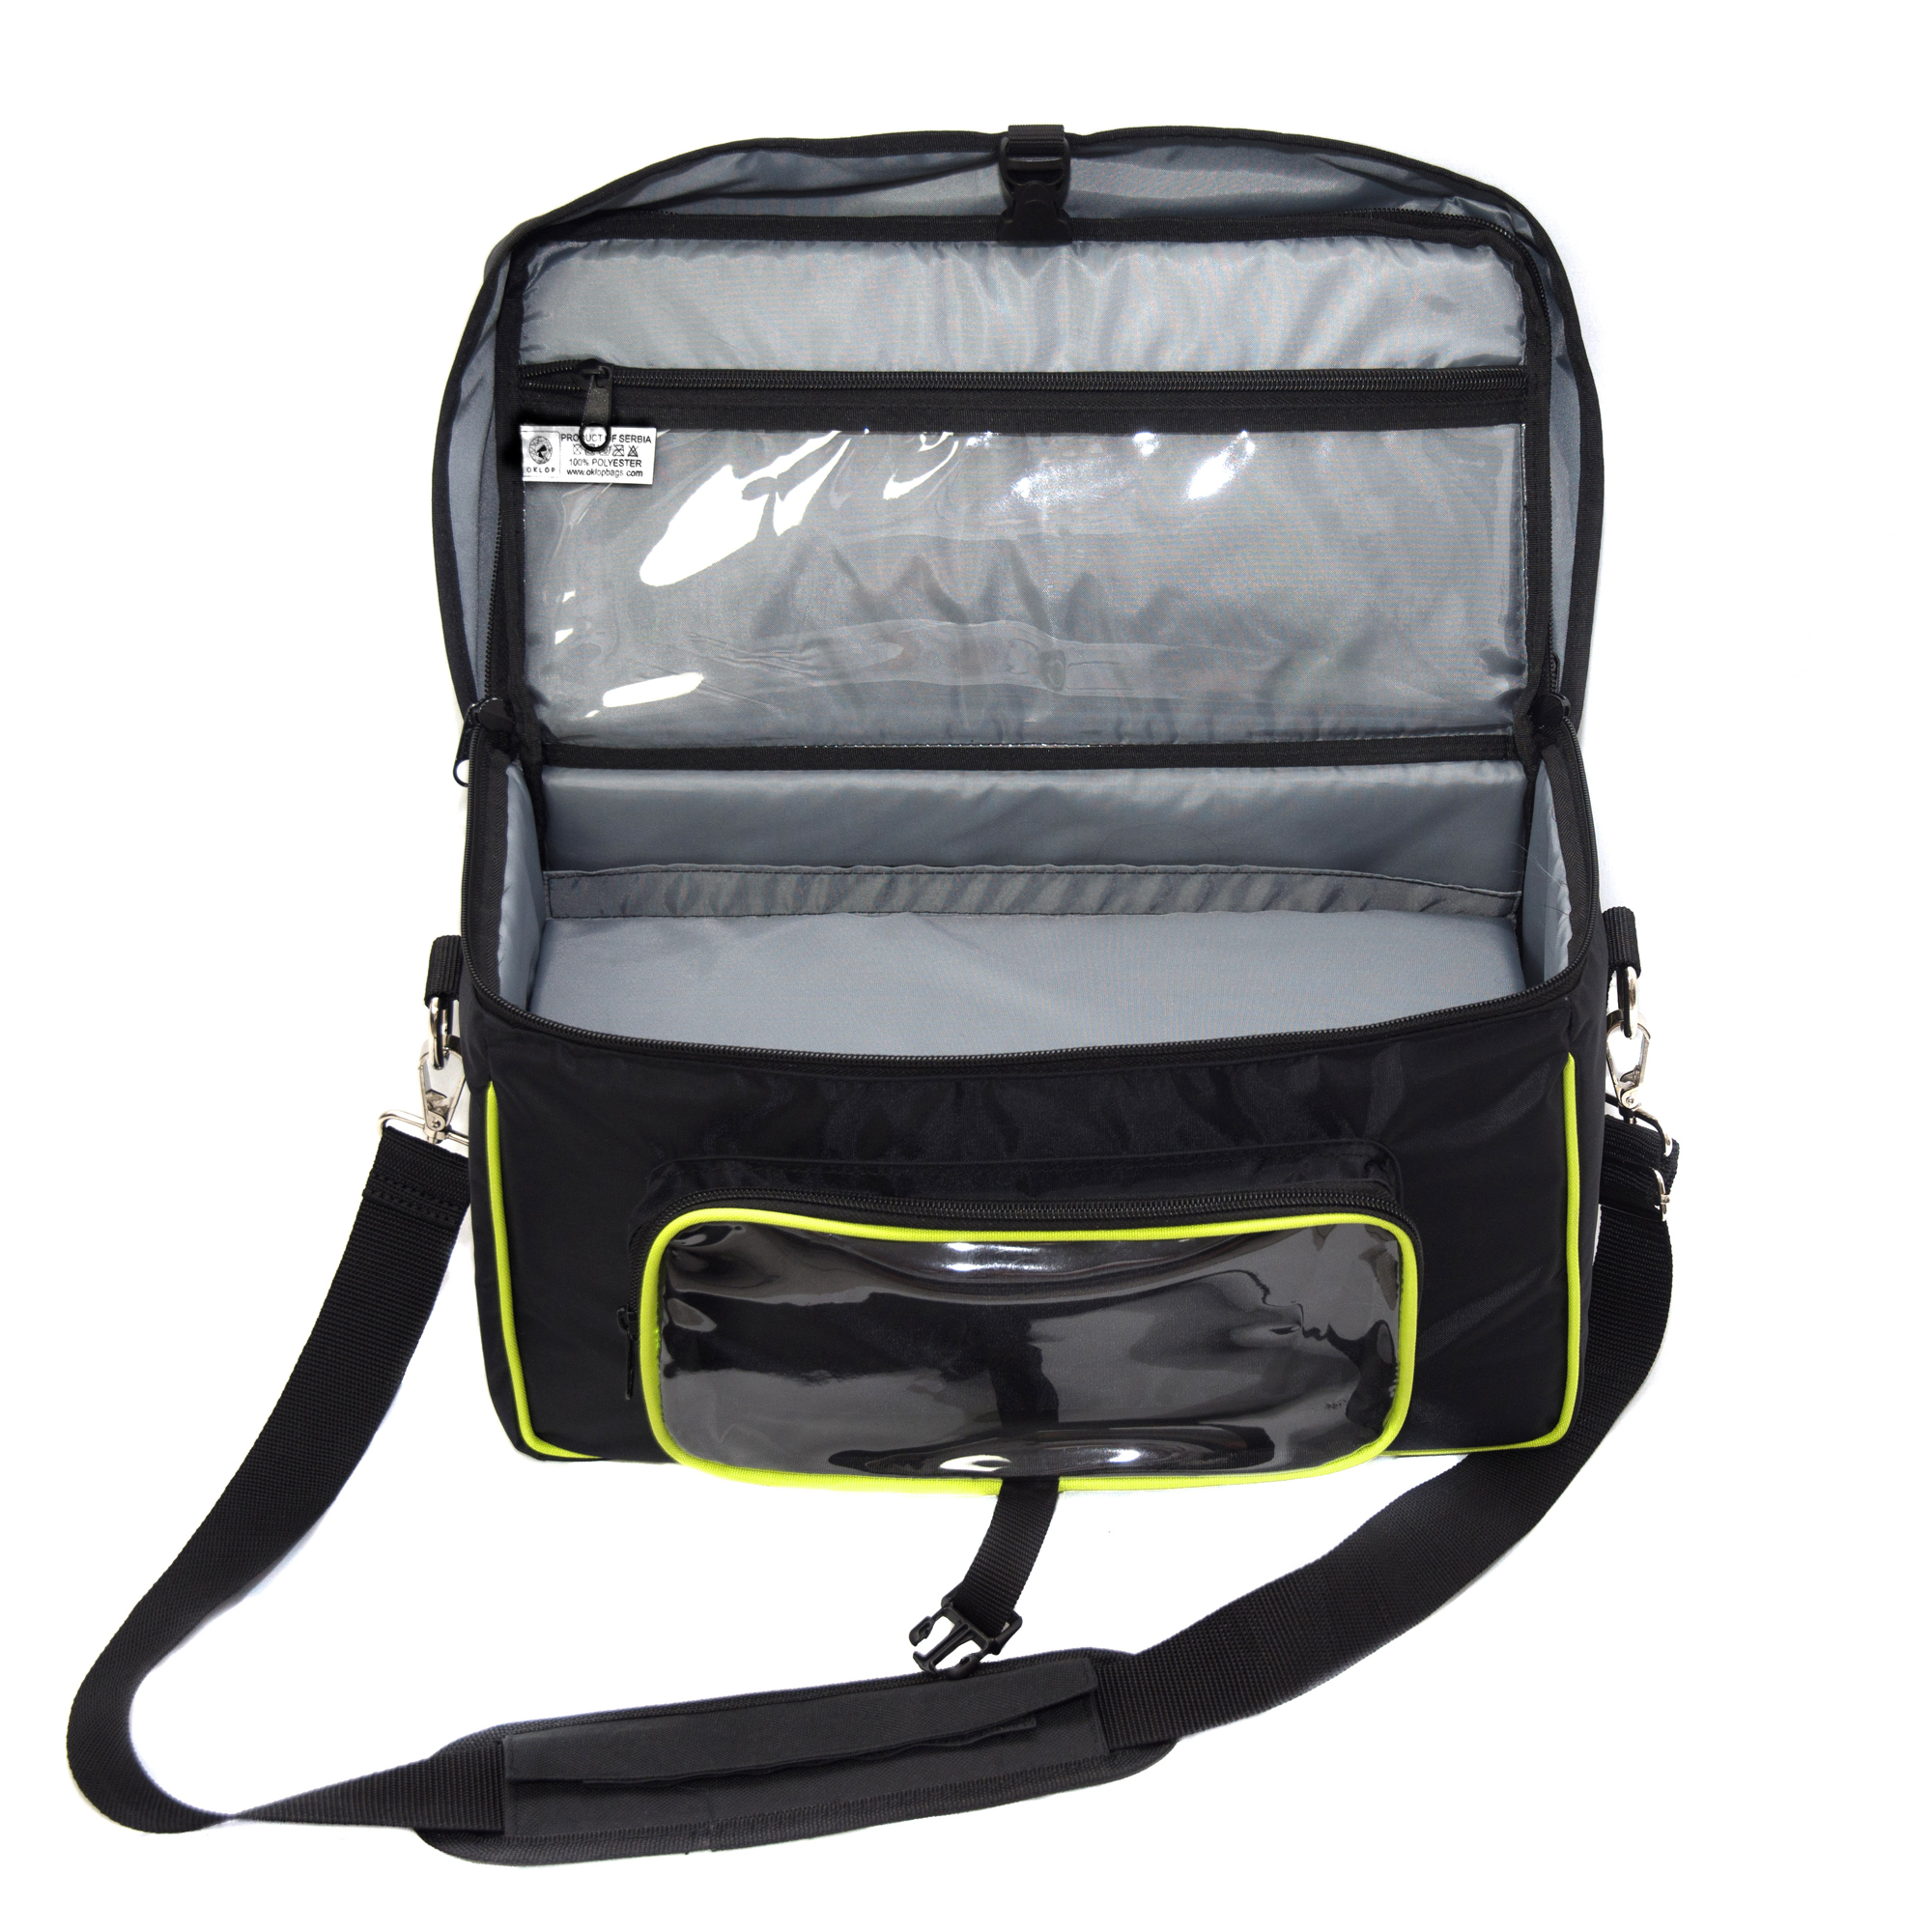 Oklop Padded Bag for Star Adventurer / SkyGuider Pro Mounts or Small Maksutovs